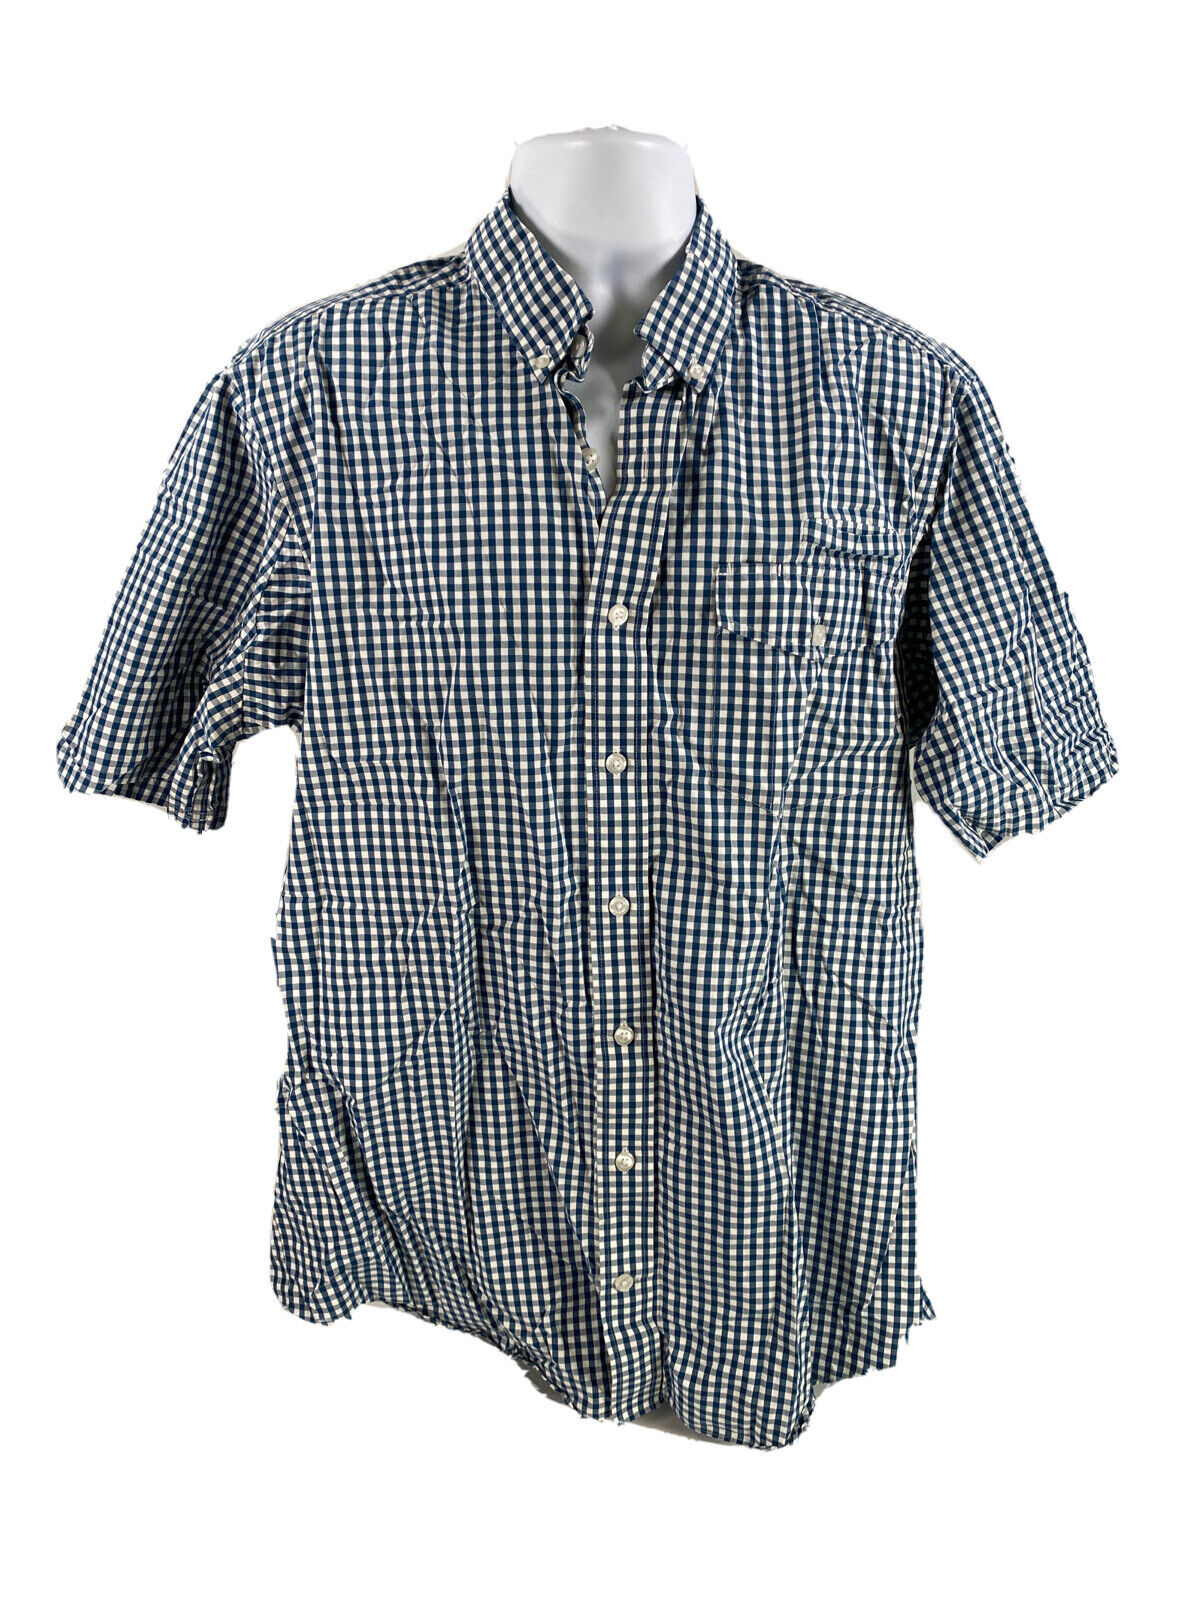 Duluth Trading Men's Blue/White Checkered Print Button Up Shirt - L Tall